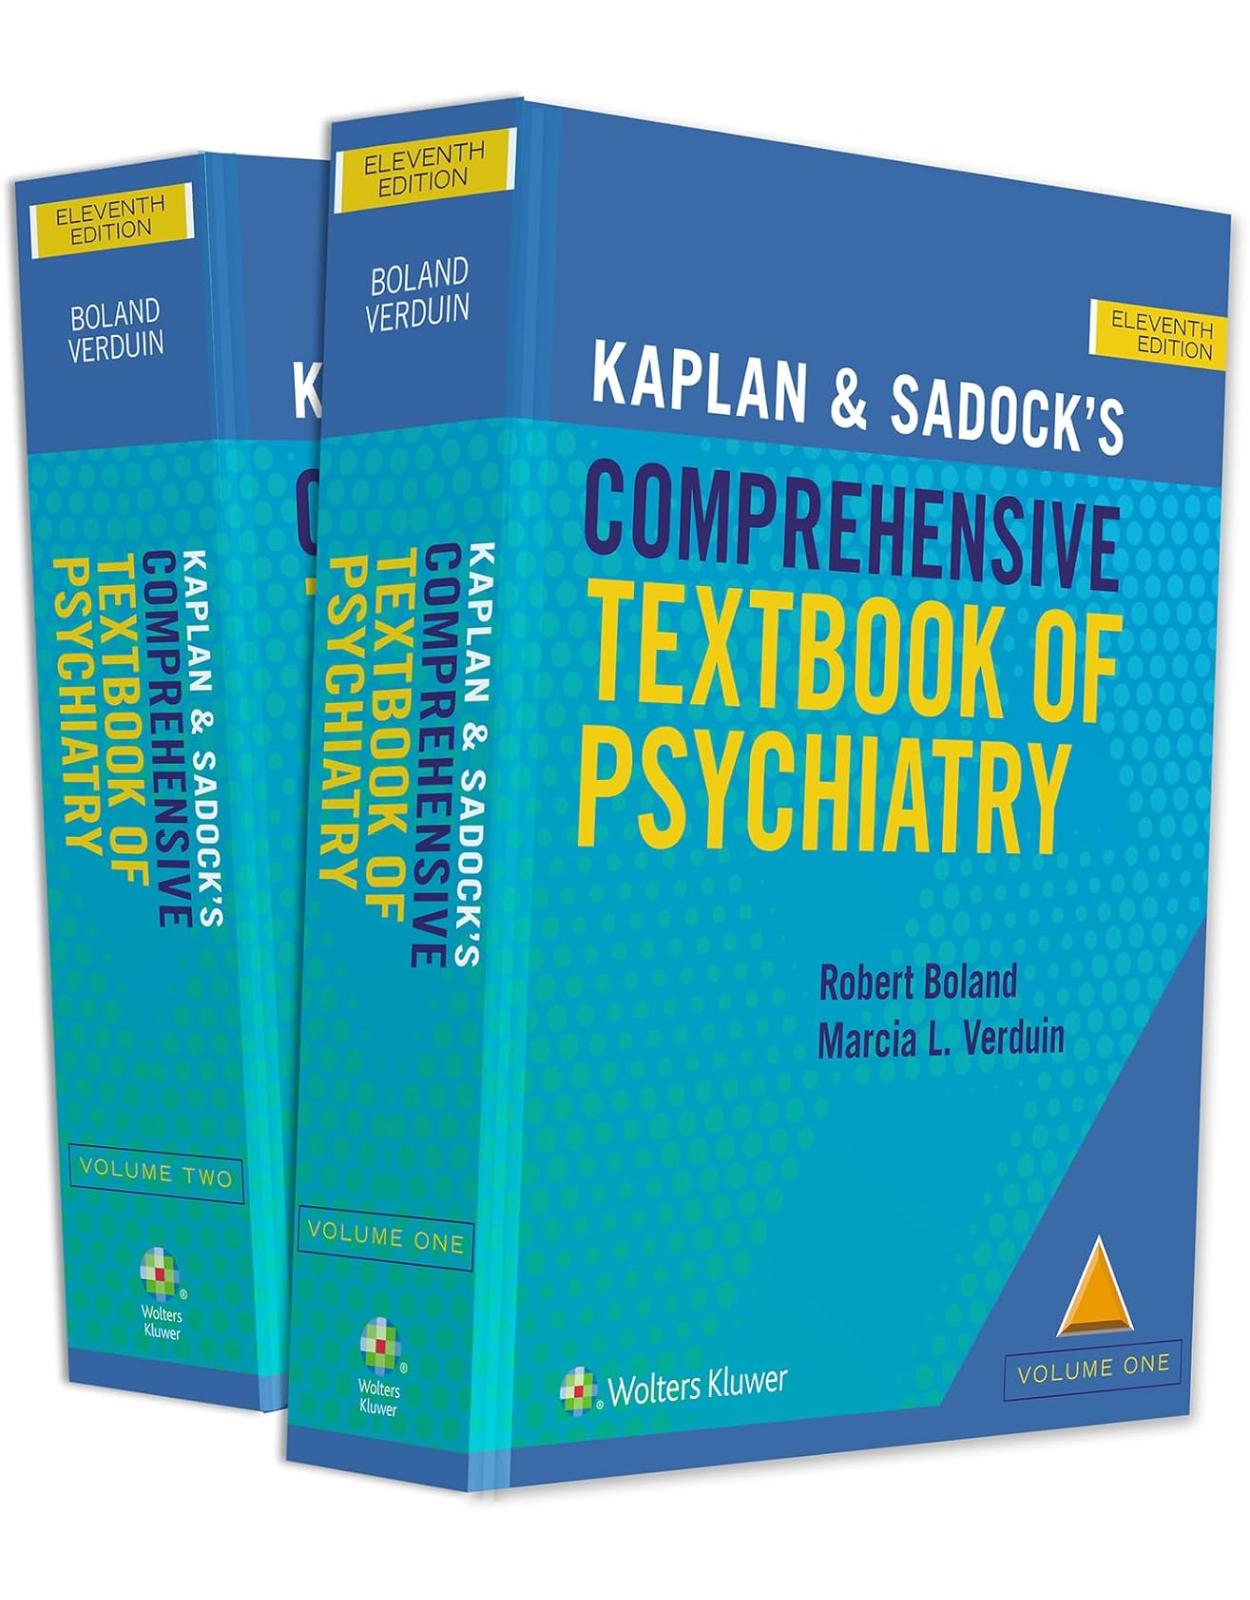 Kaplan and Sadock’s Comprehensive Textbook of Psychiatry